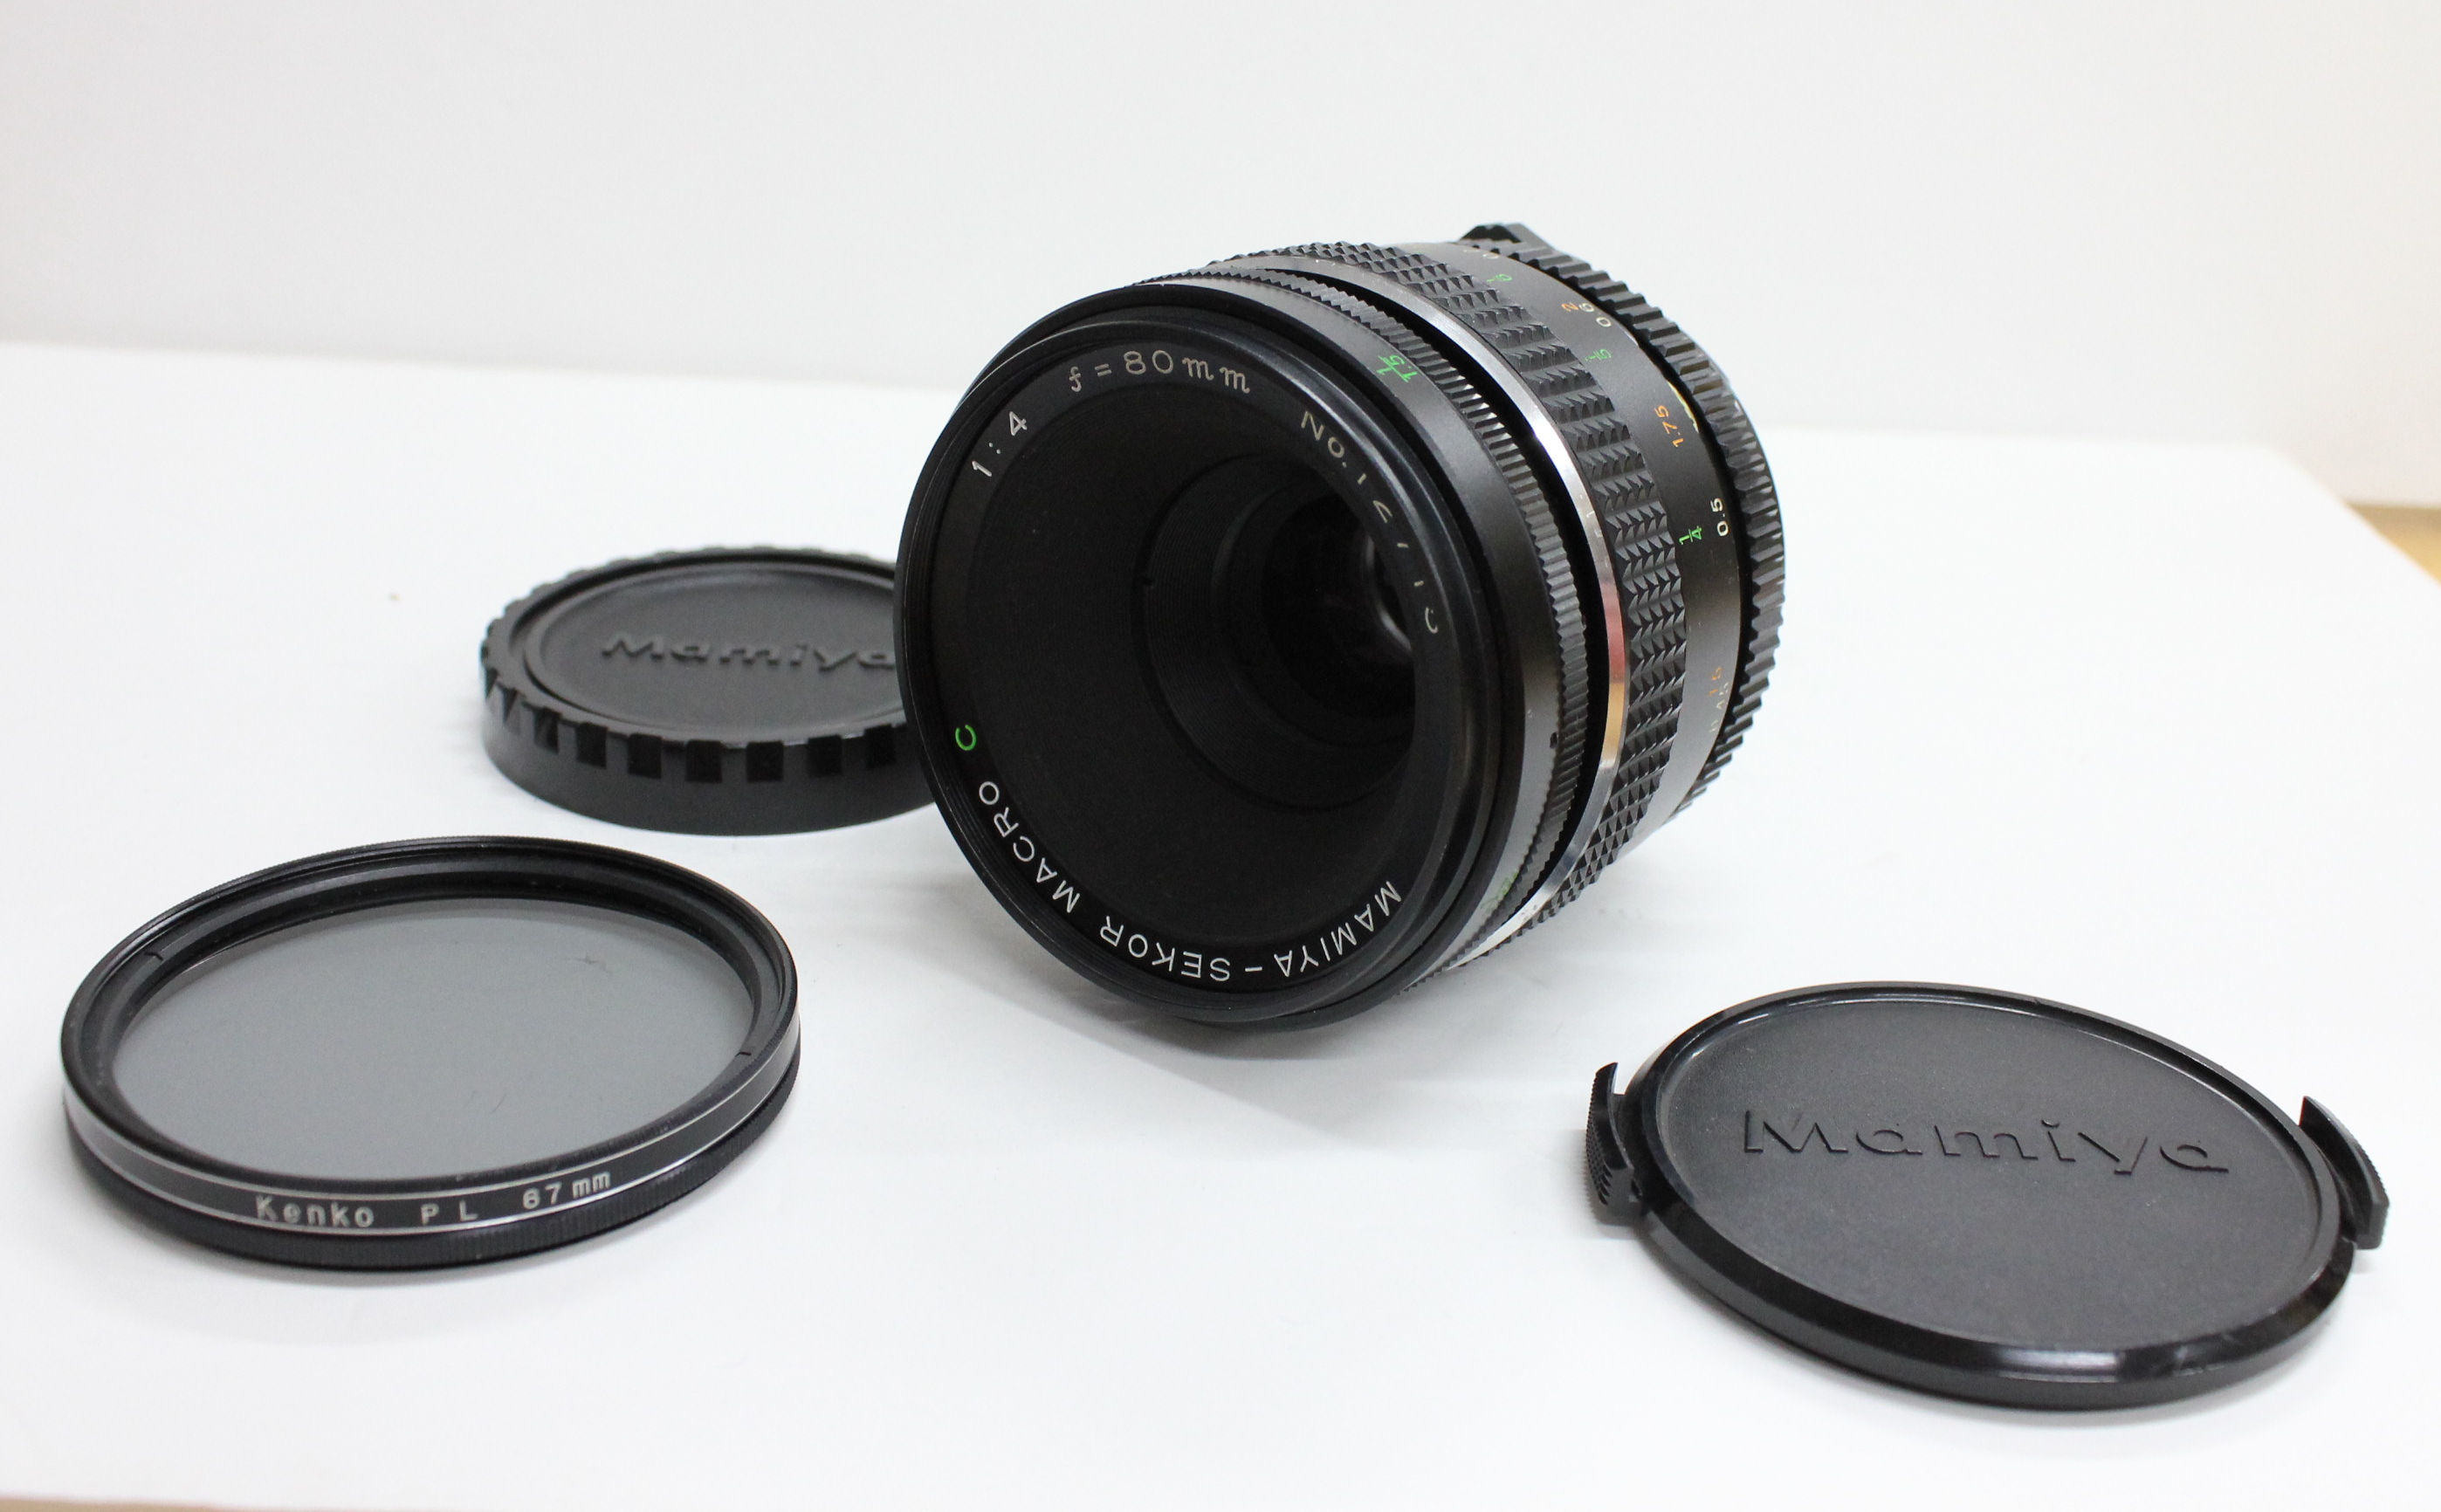 Japan Used Camera Shop | [Near Mint] Mamiya-Sekor Macro C 80mm F/4 Lens for M645/Pro/TL/1000s from Japan